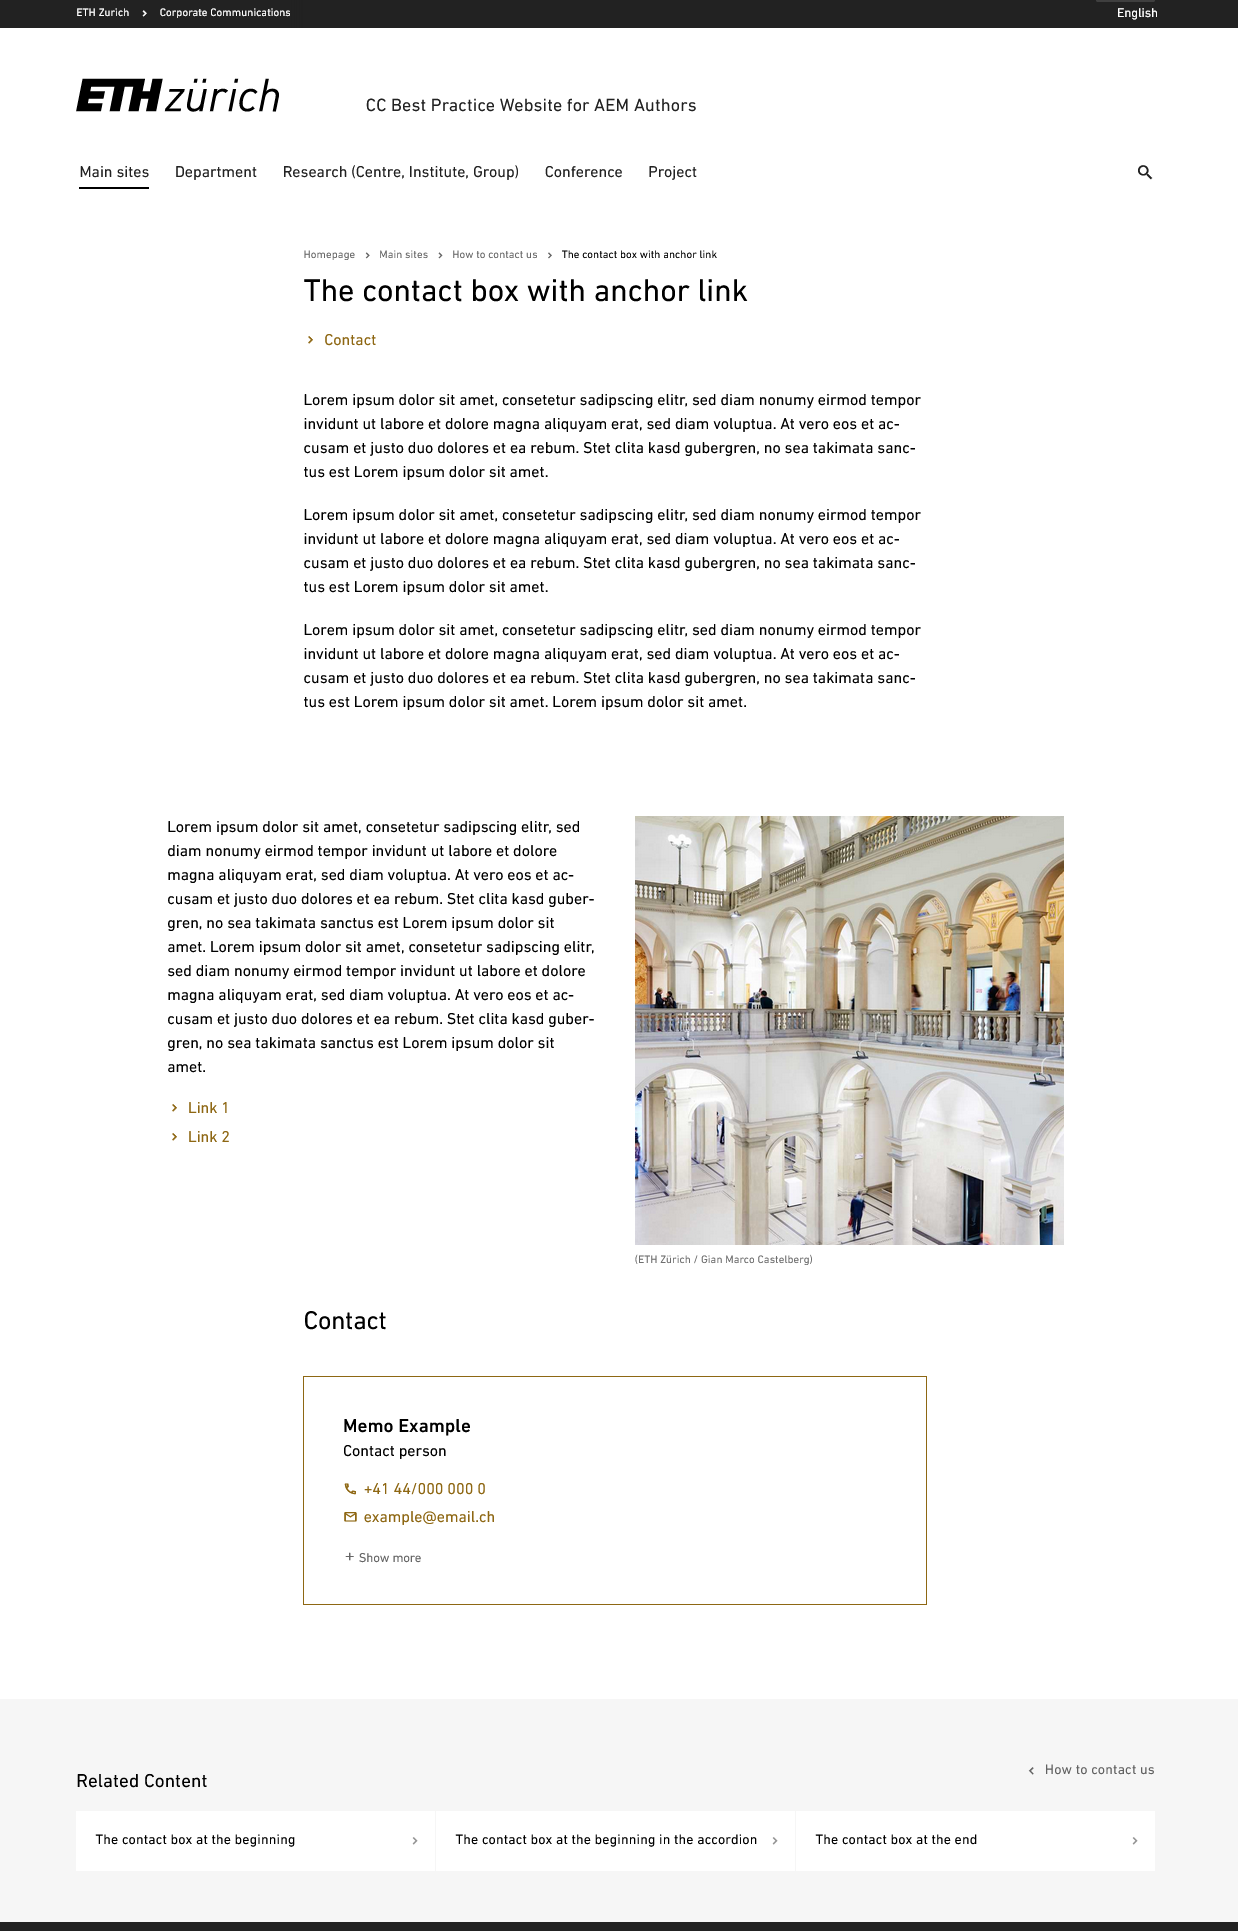 Vergrösserte Ansicht: Screenshot Webpage: contact box with anchor link